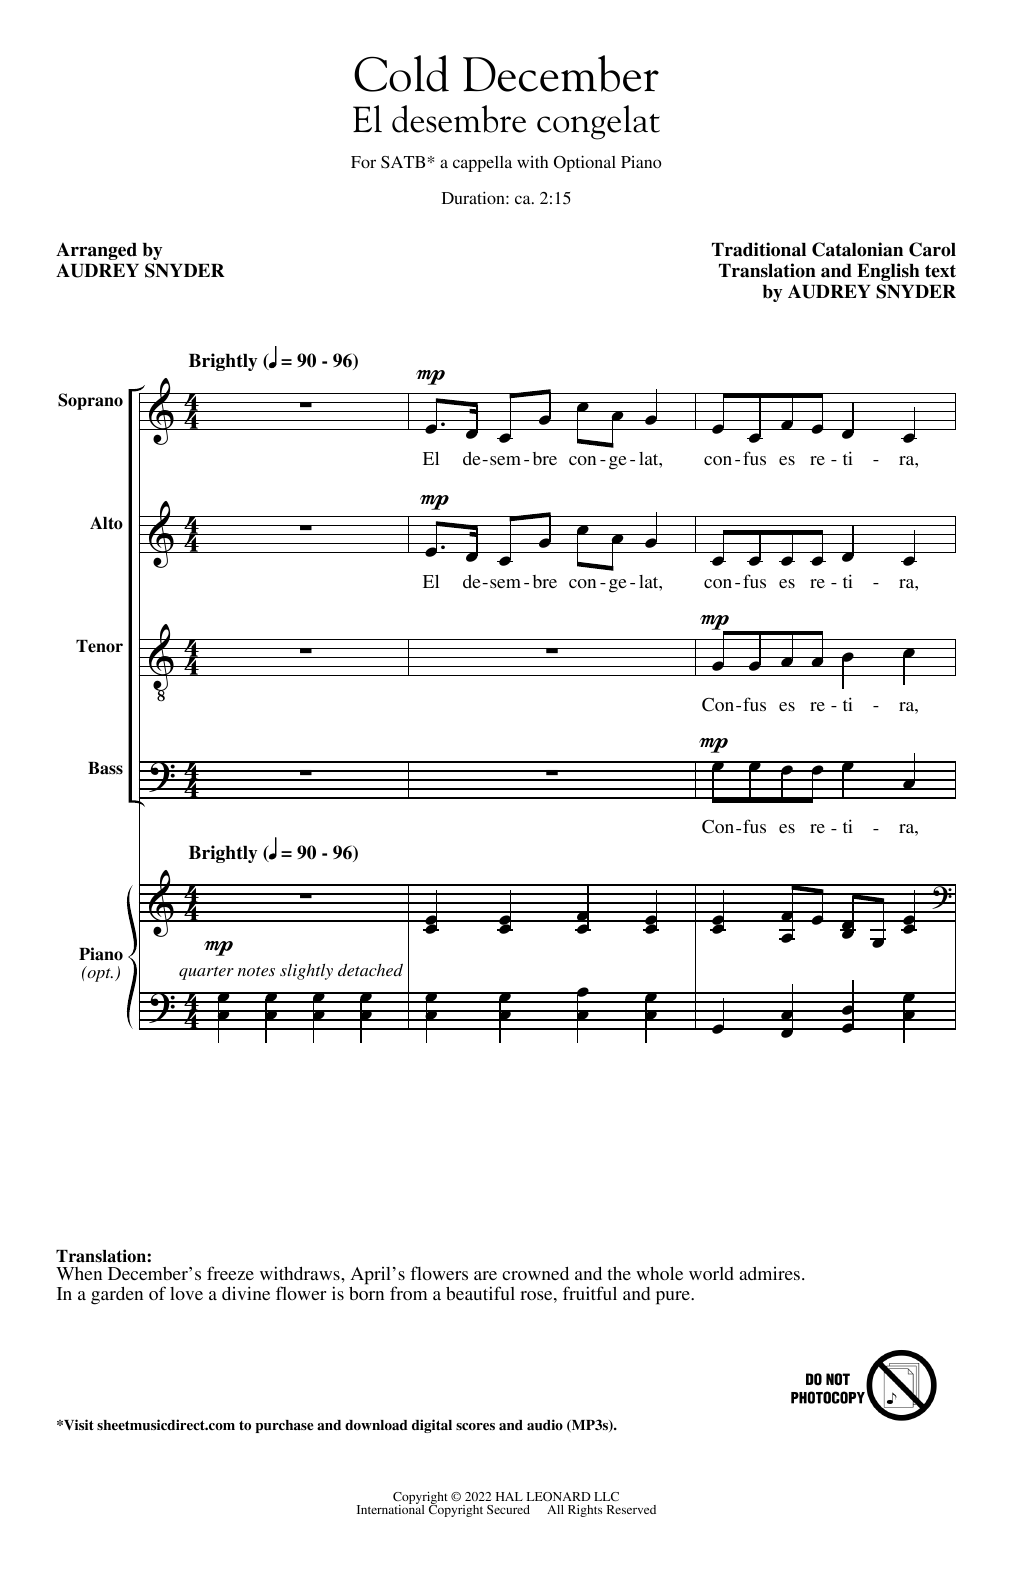 Traditional Spanish Carol El Desembre Congelat (arr. Audrey Snyder) Sheet Music Notes & Chords for SATB Choir - Download or Print PDF